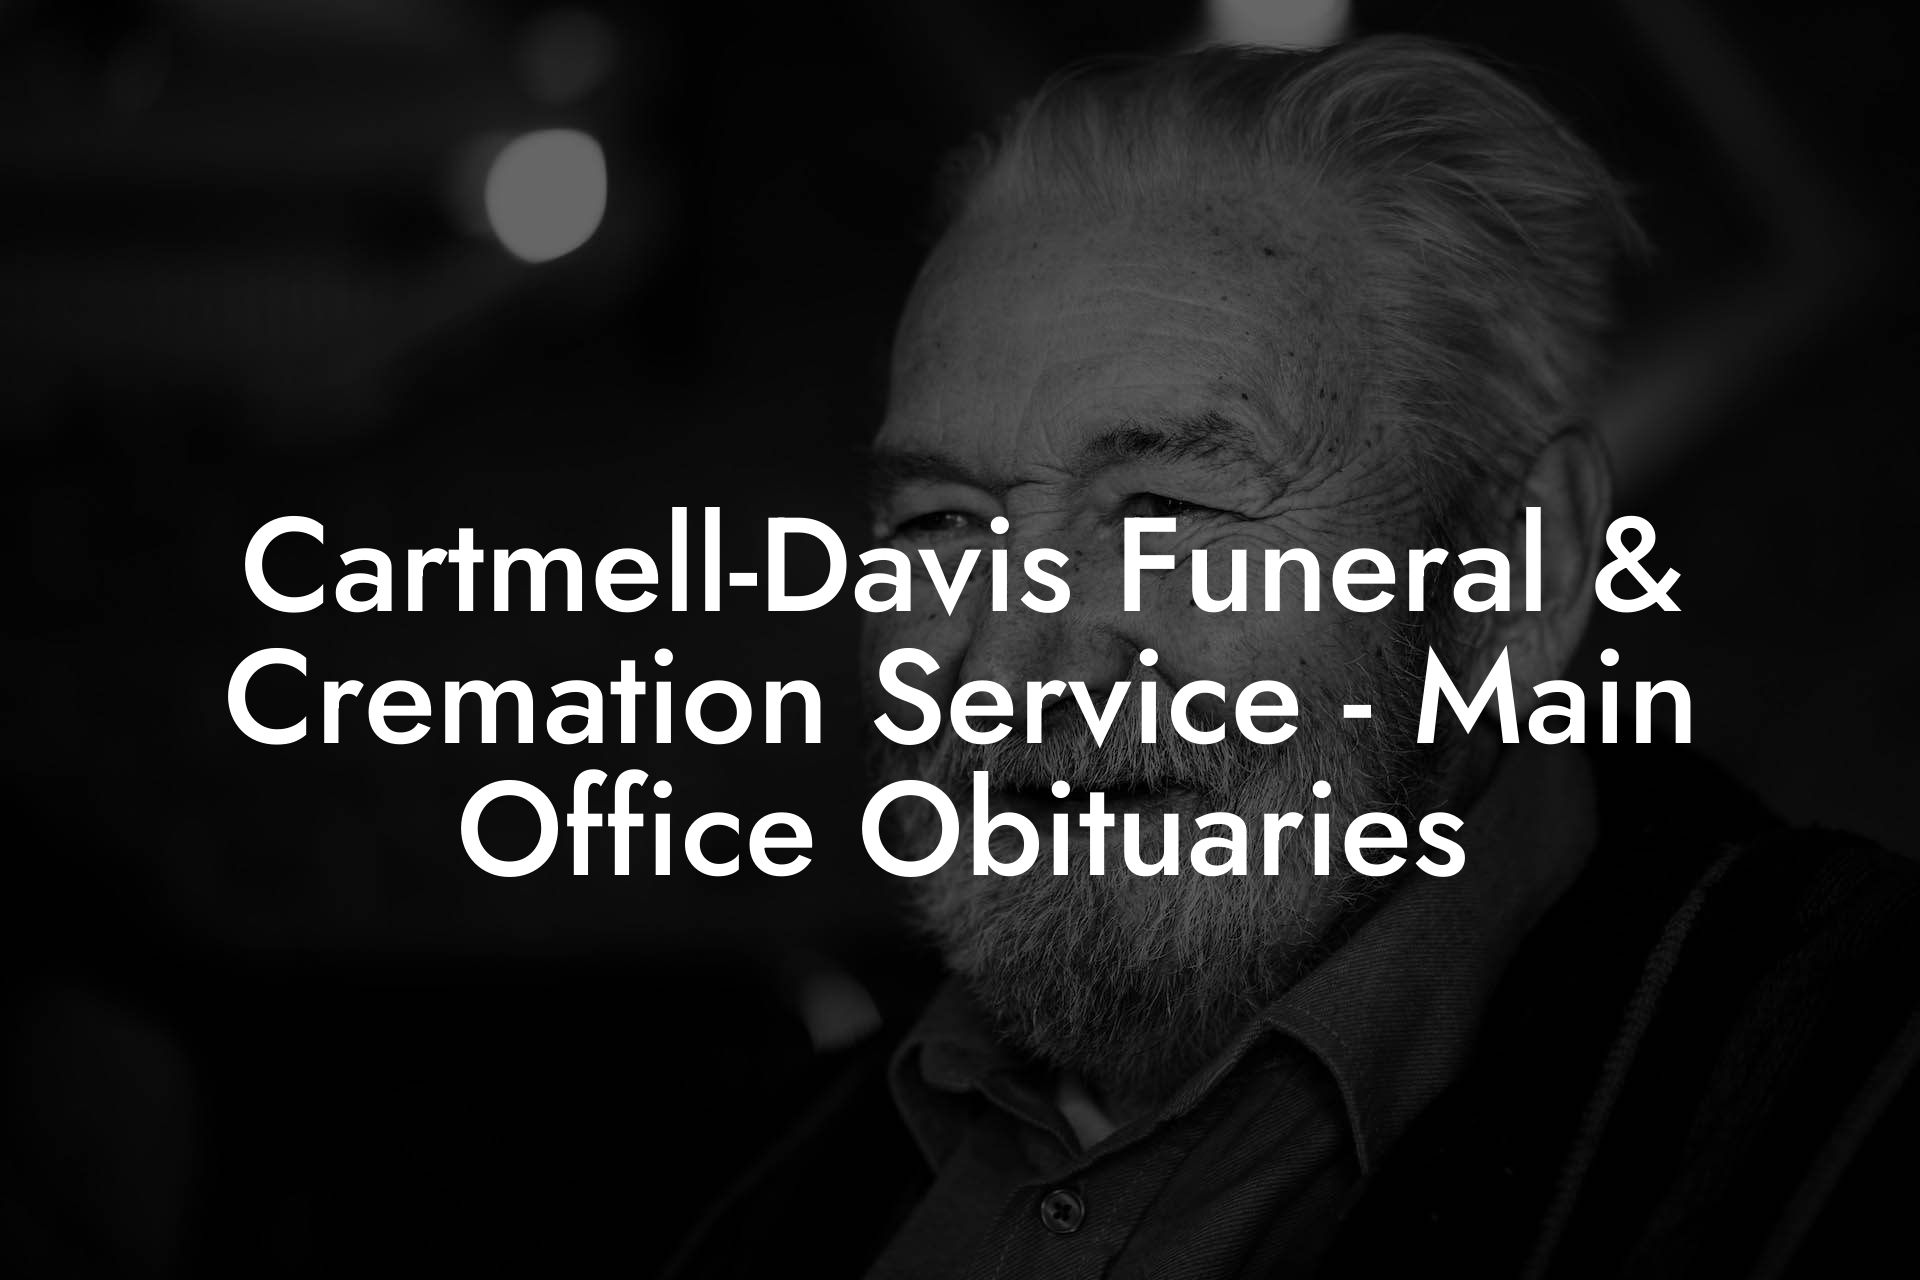 Cartmell-Davis Funeral & Cremation Service - Main Office Obituaries